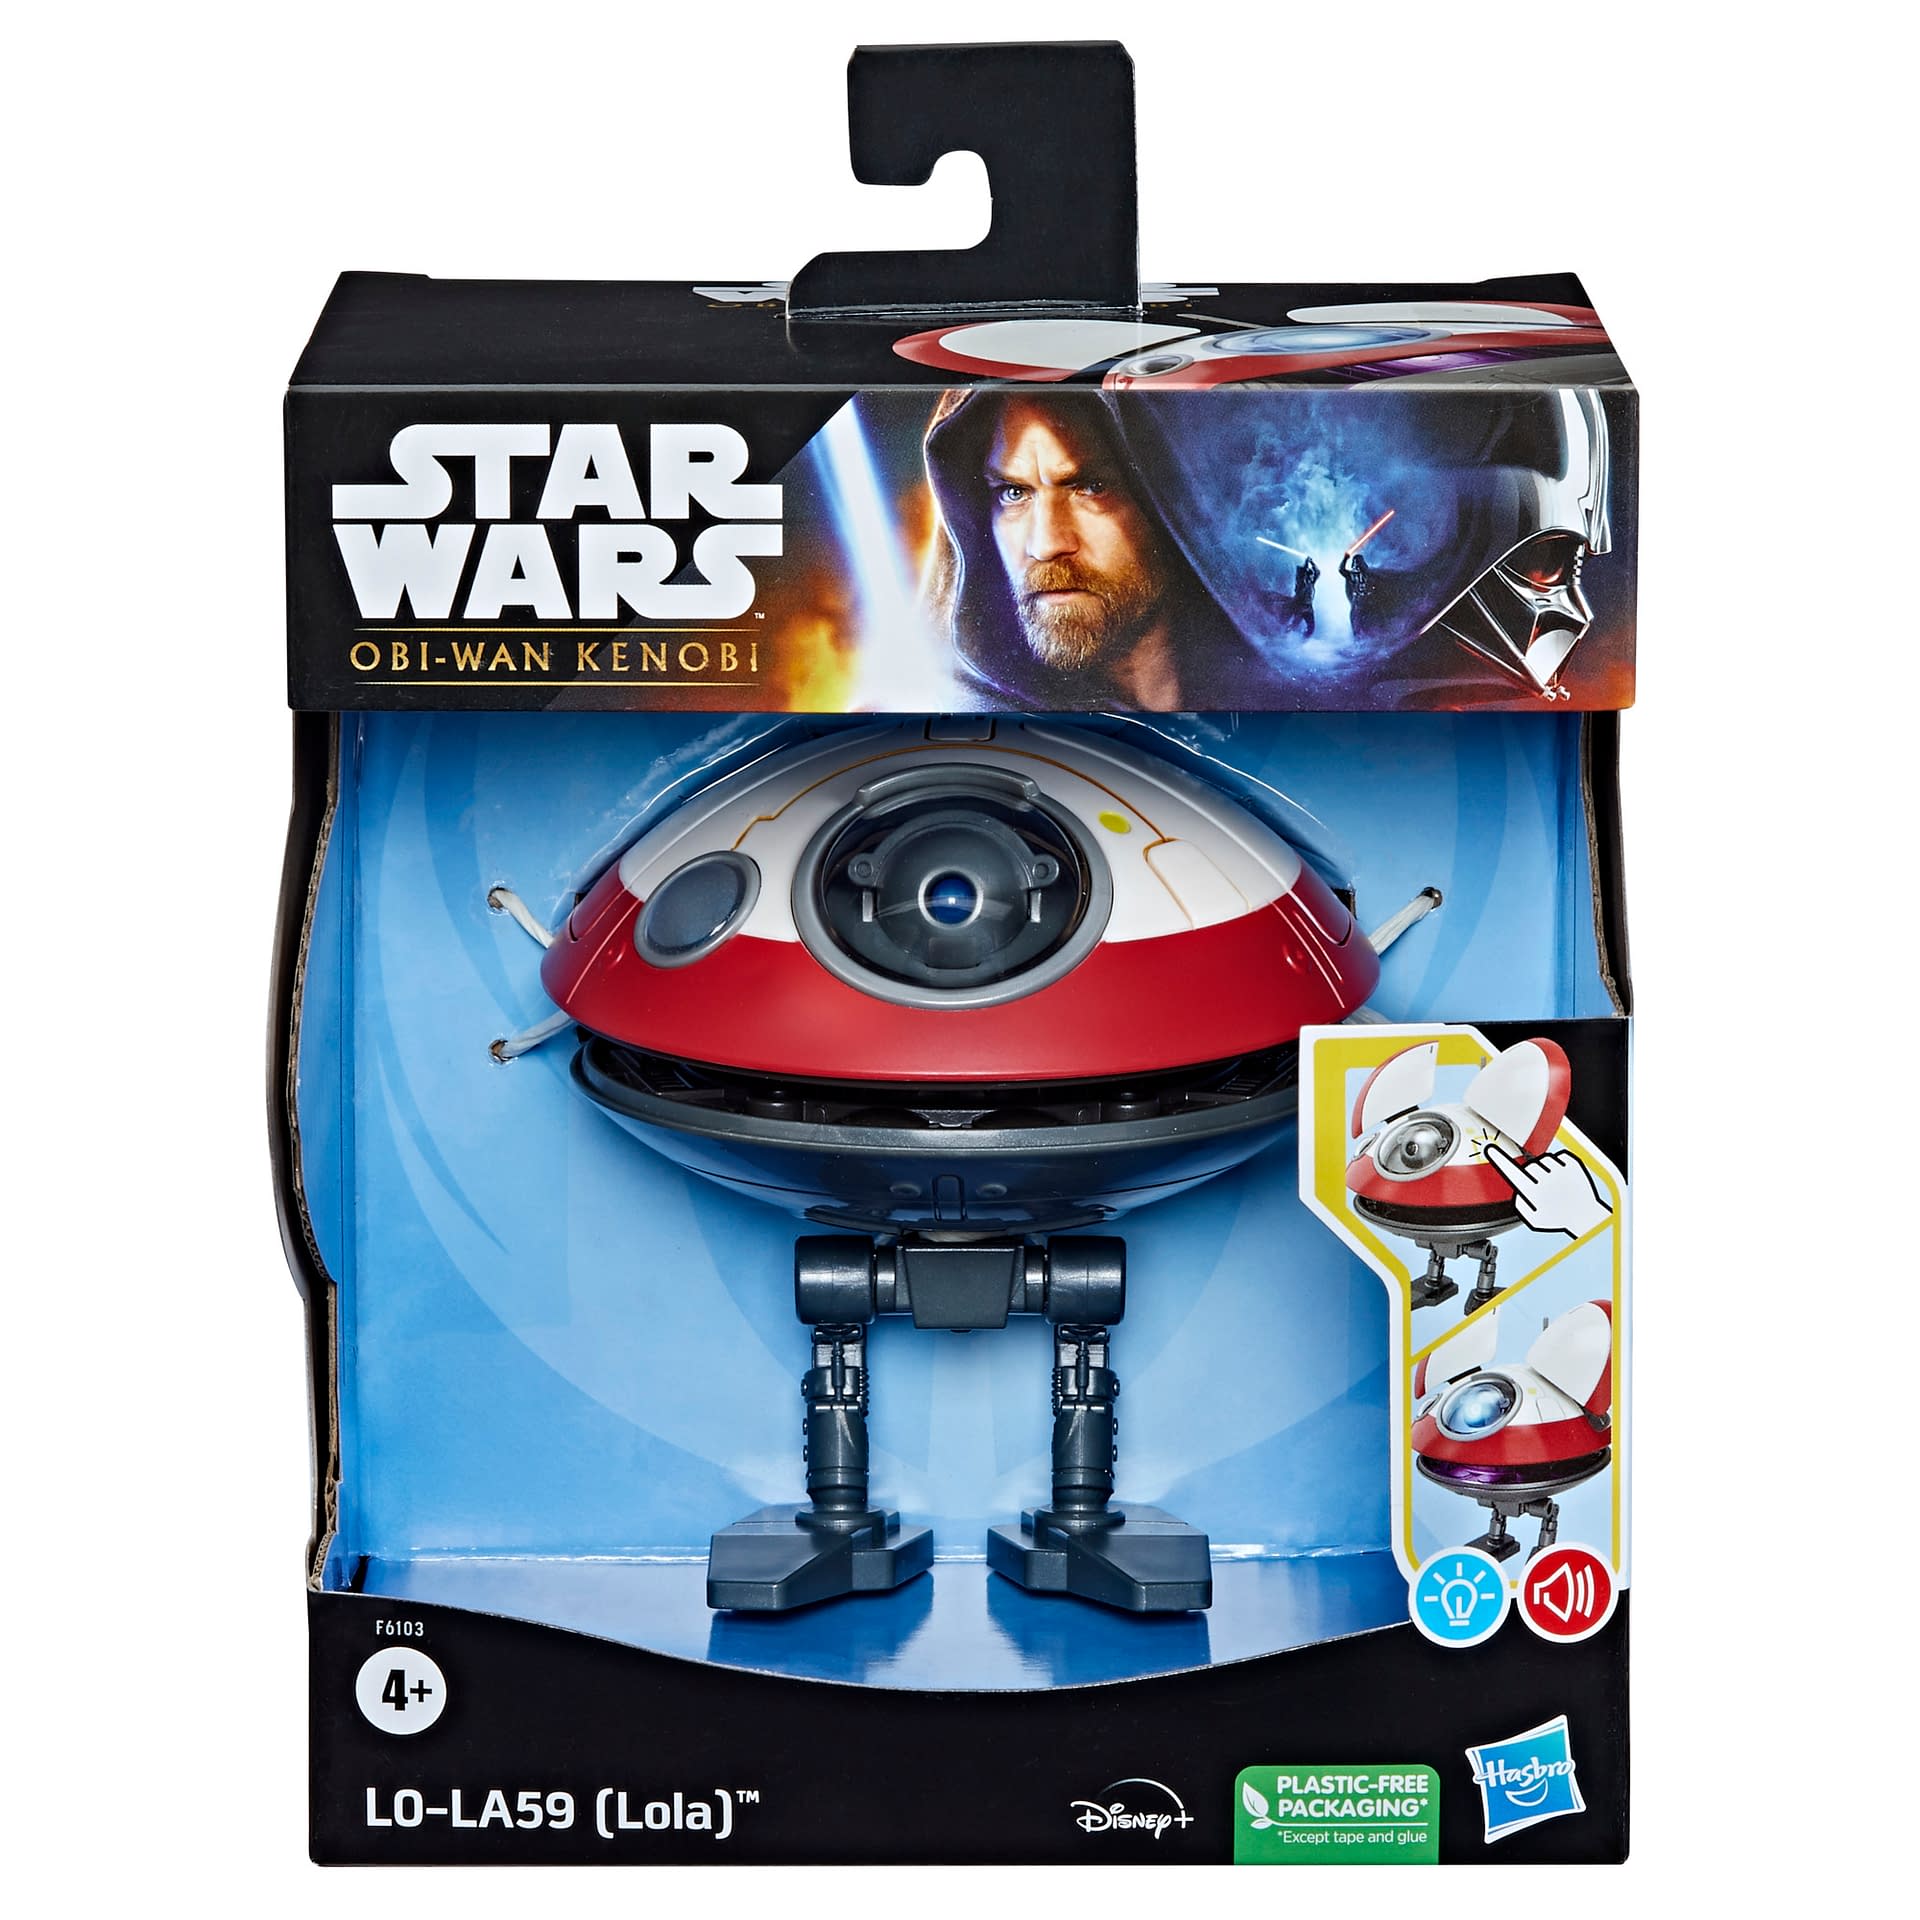 Star Wars Newest Droid L0-LA59 aka LOLA Comes to Hasbro 